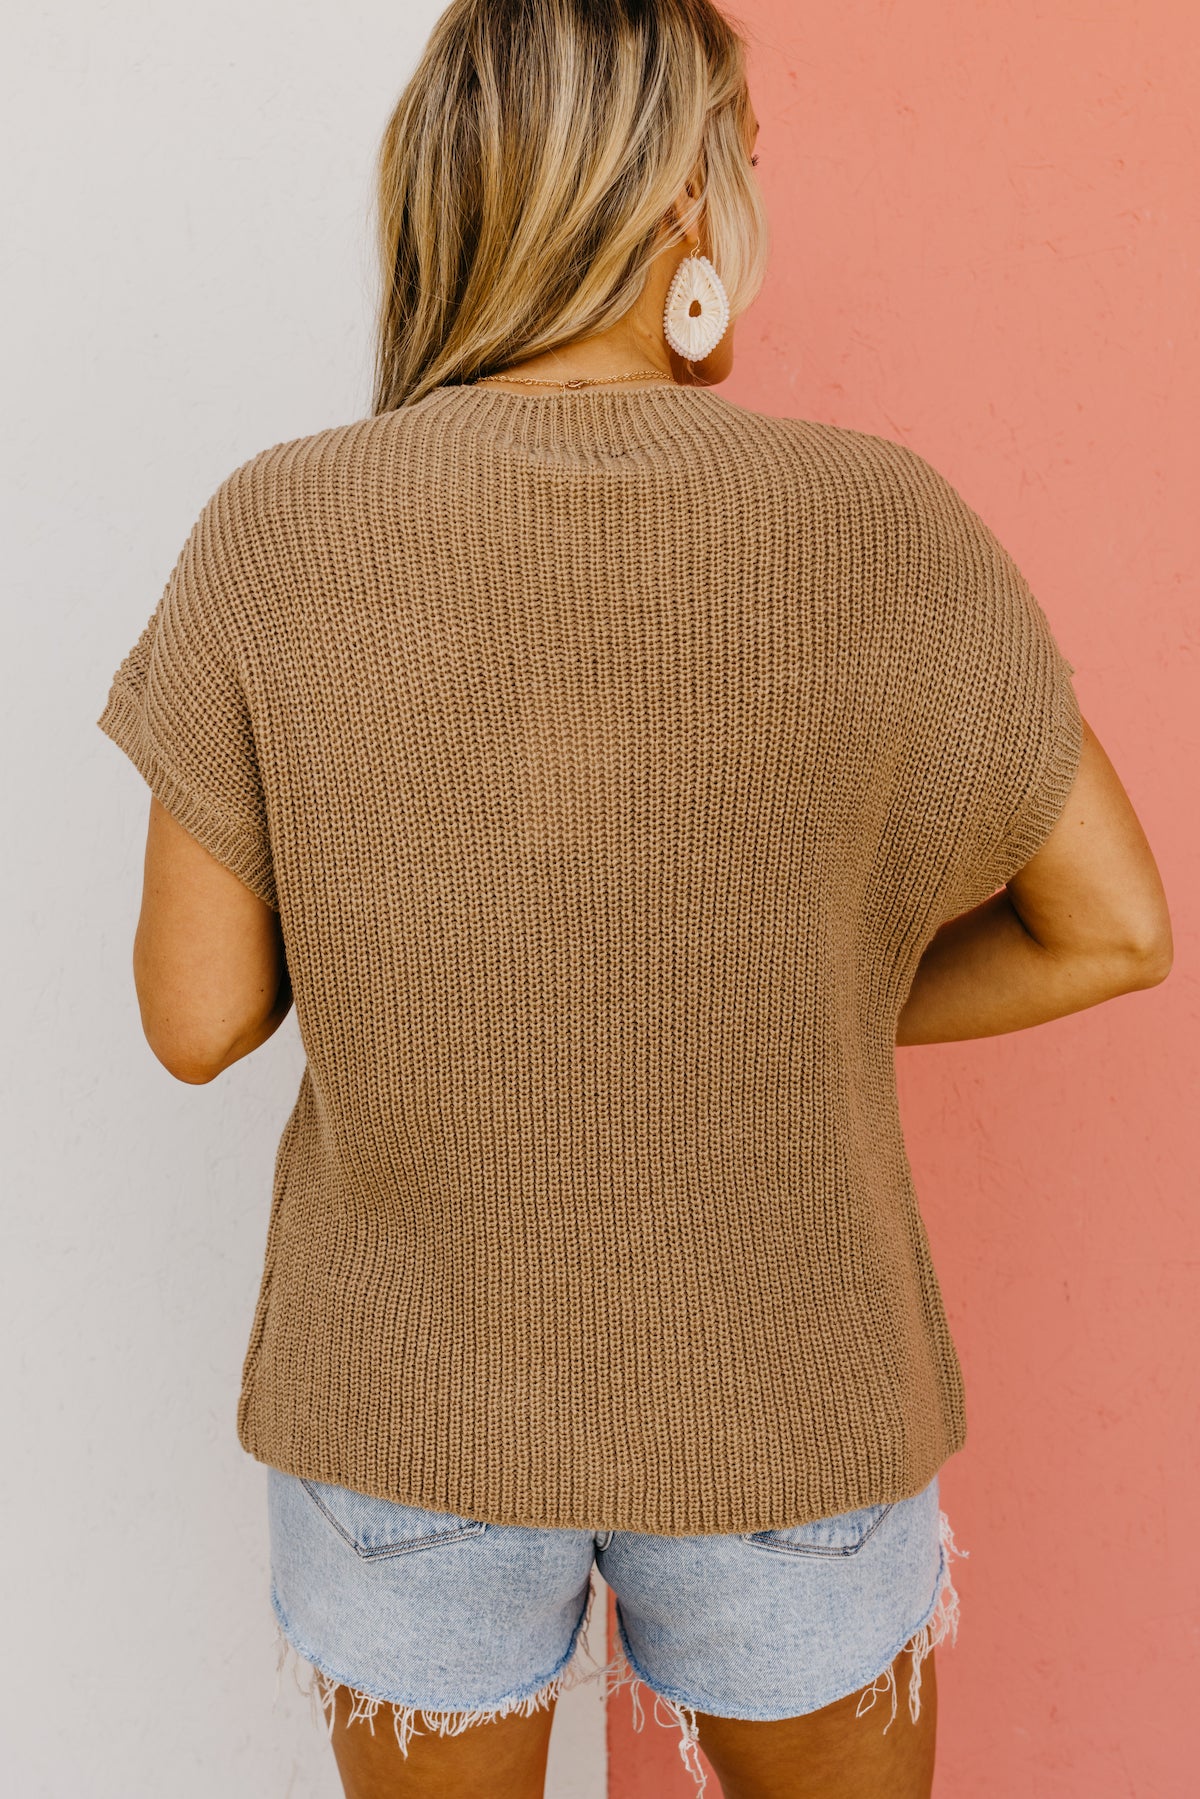 The Madelynn Sleeveless Sweater Top